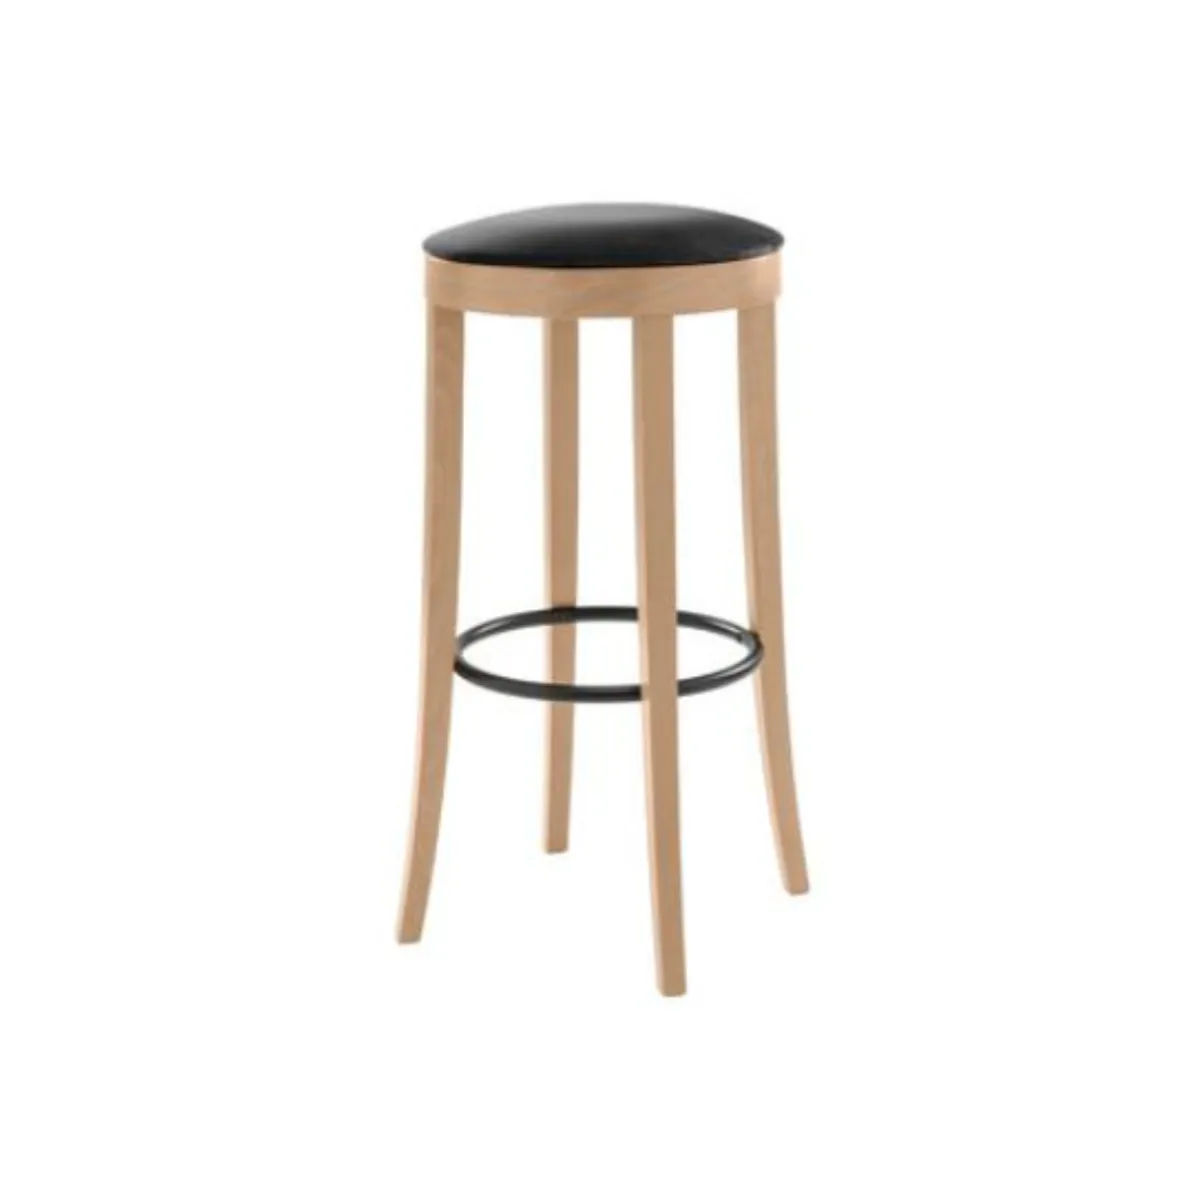 Elodie soft bar stool 1